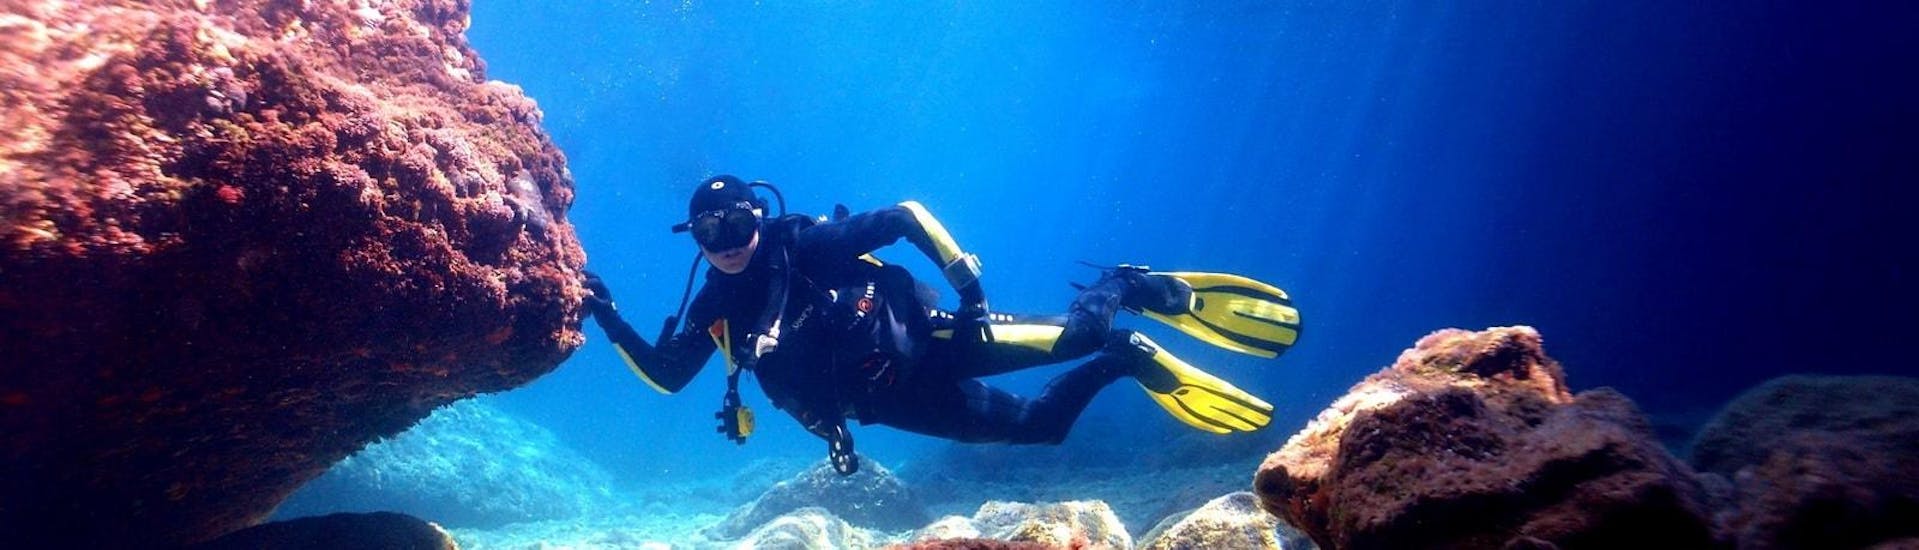 Discover Scuba Duiken in Kaštel Stari voor beginners met Diving Center Venus Kaštel Stari.